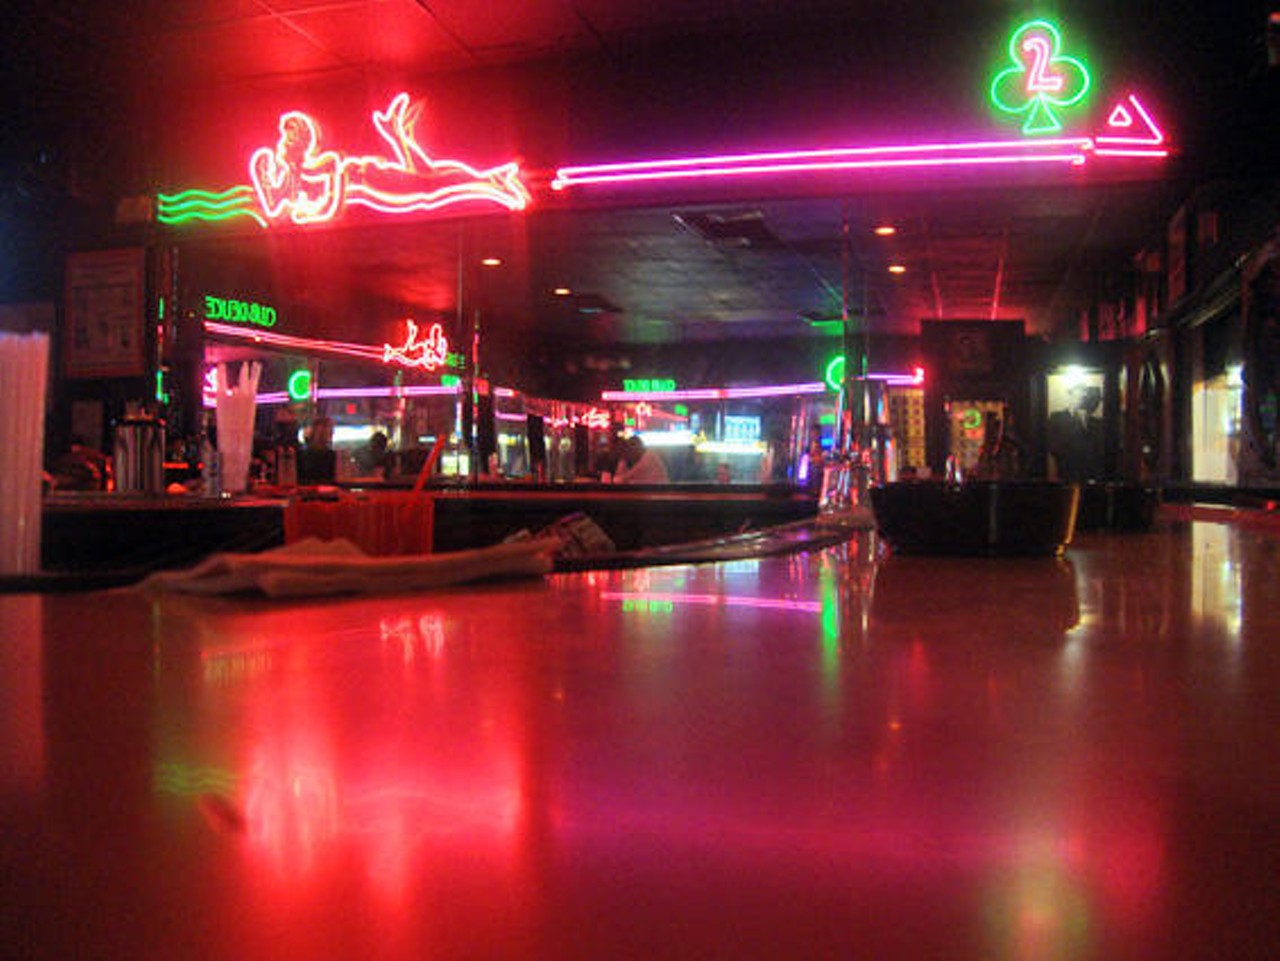 Good lighting is key in a Dive Bar.
Mac's Club Deuce in Miami Beach, Florida.